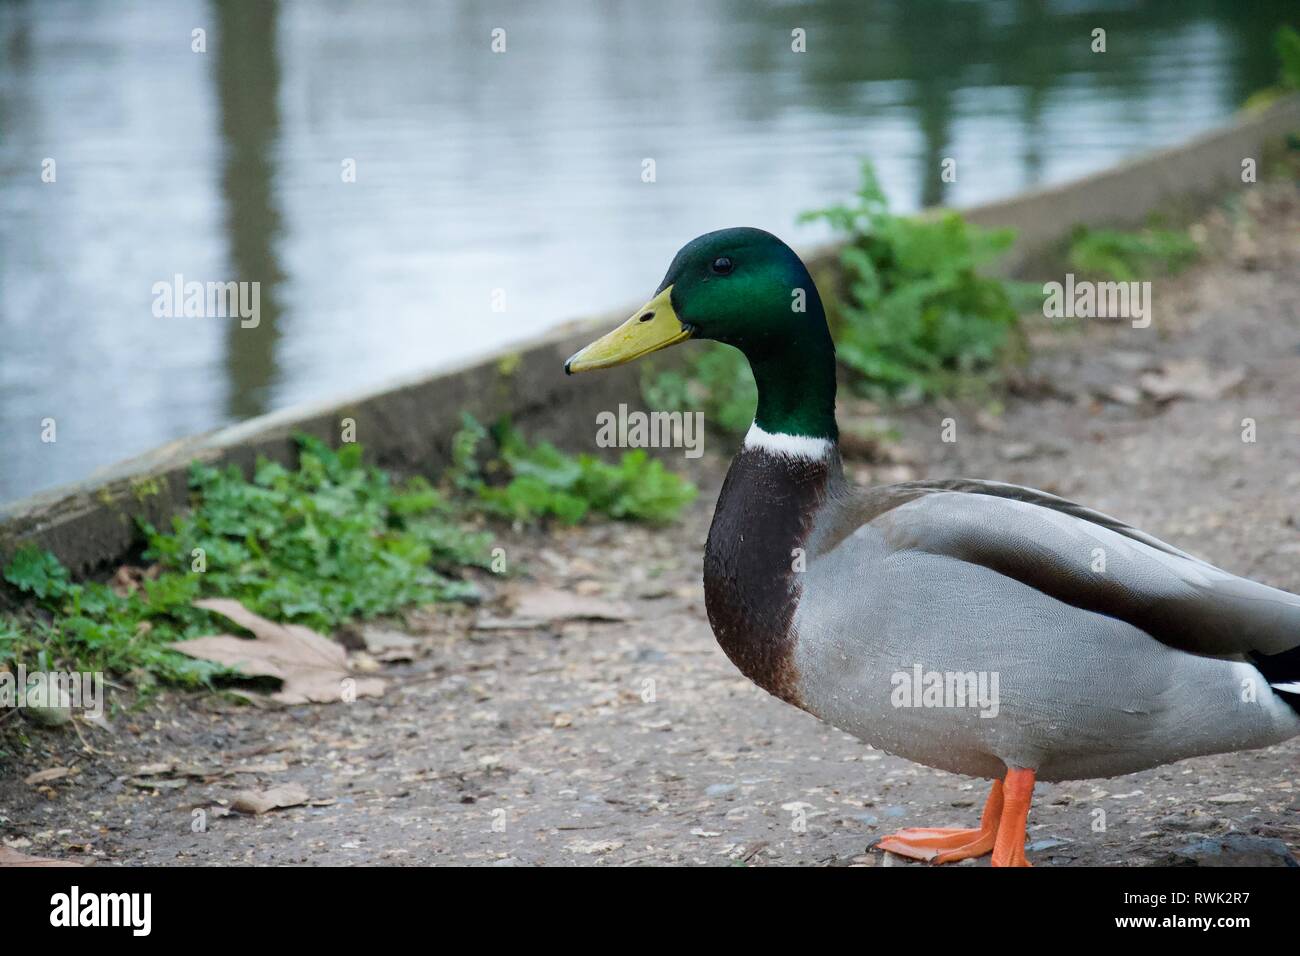 A Green Headed Male Mallard Duck Standing On A Stony Footpath Next